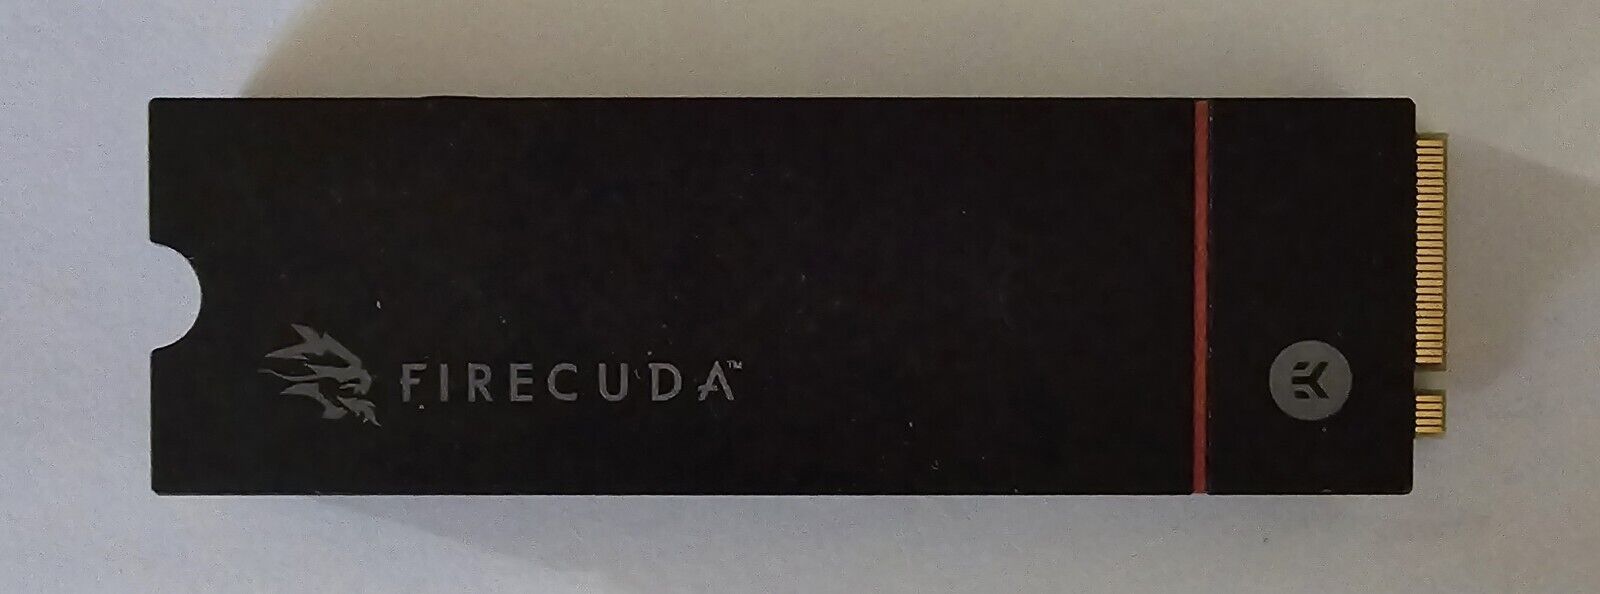 Seagate FireCuda 530 1TB PS5 internal SSD with Heatsink